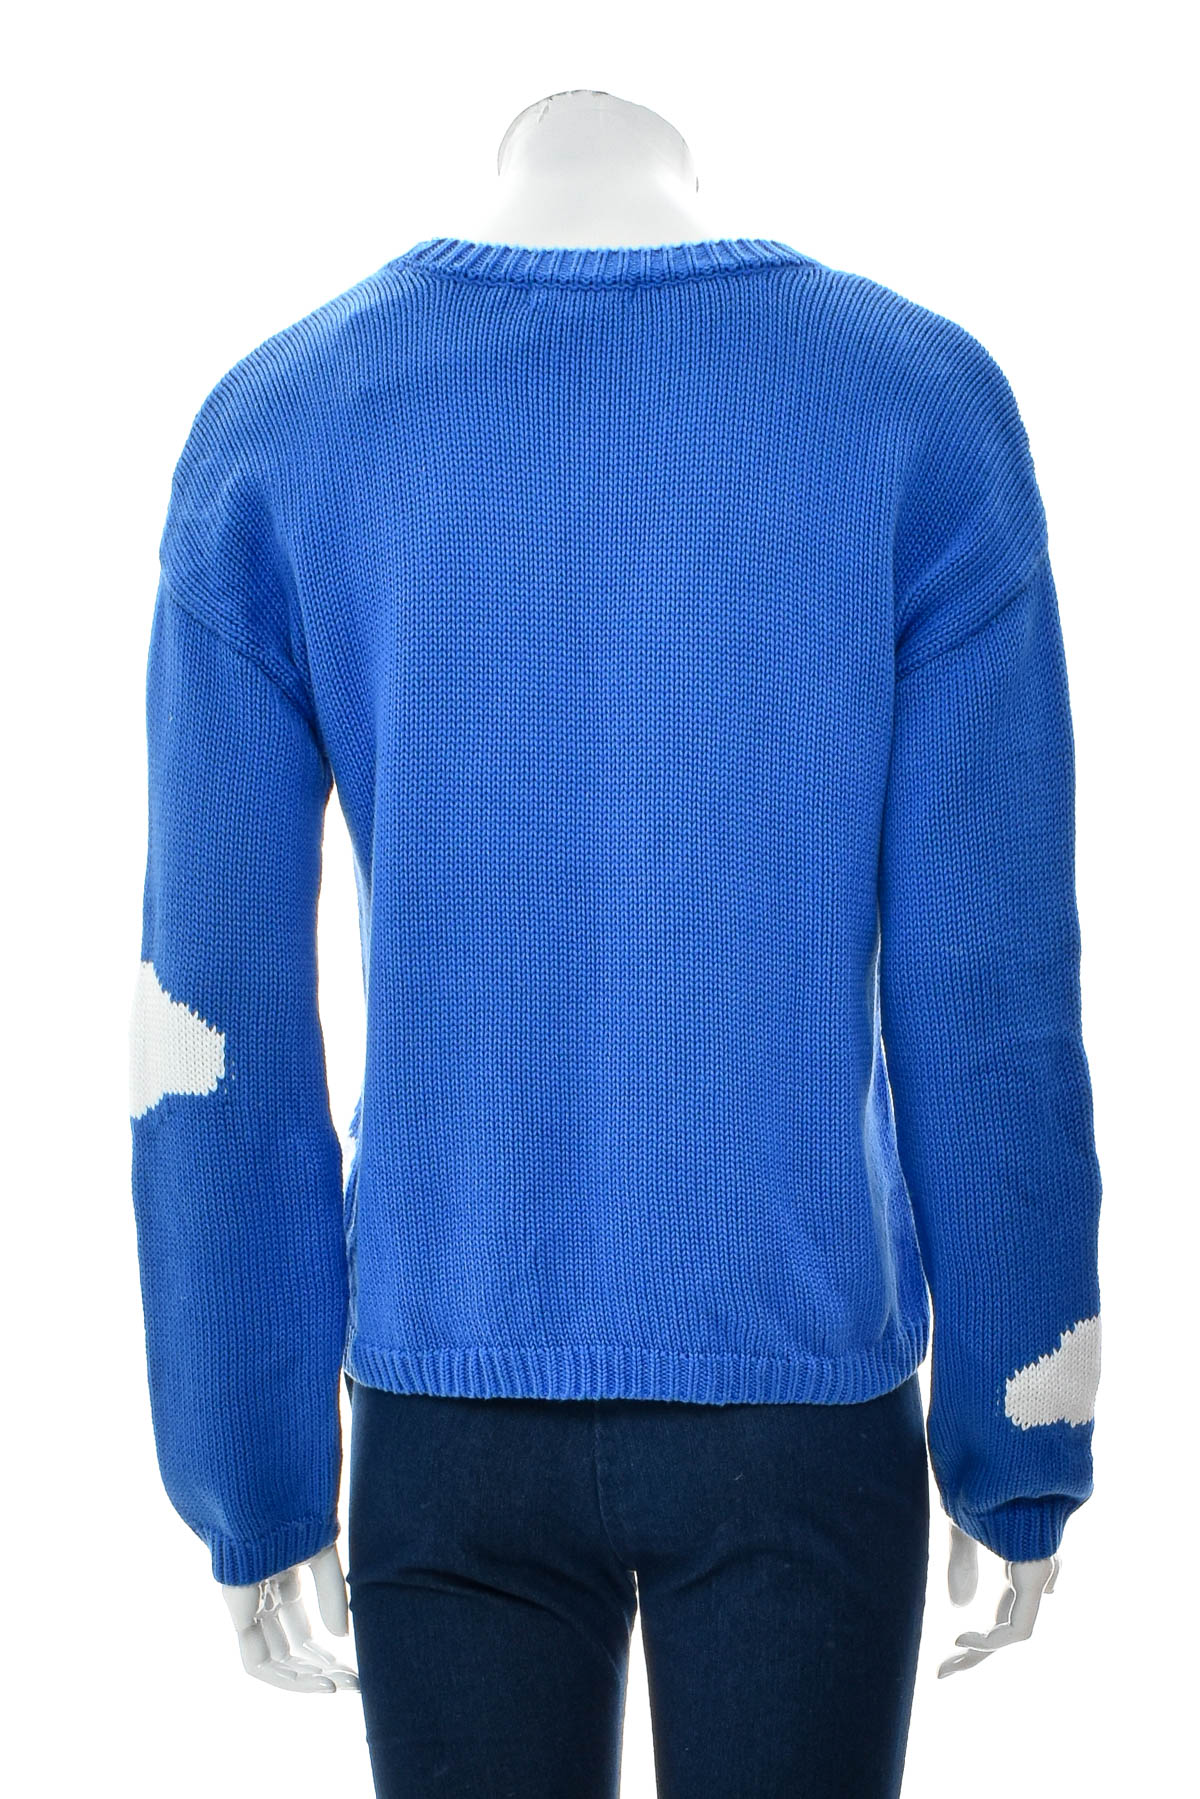 Women's sweater - 525 america - 1